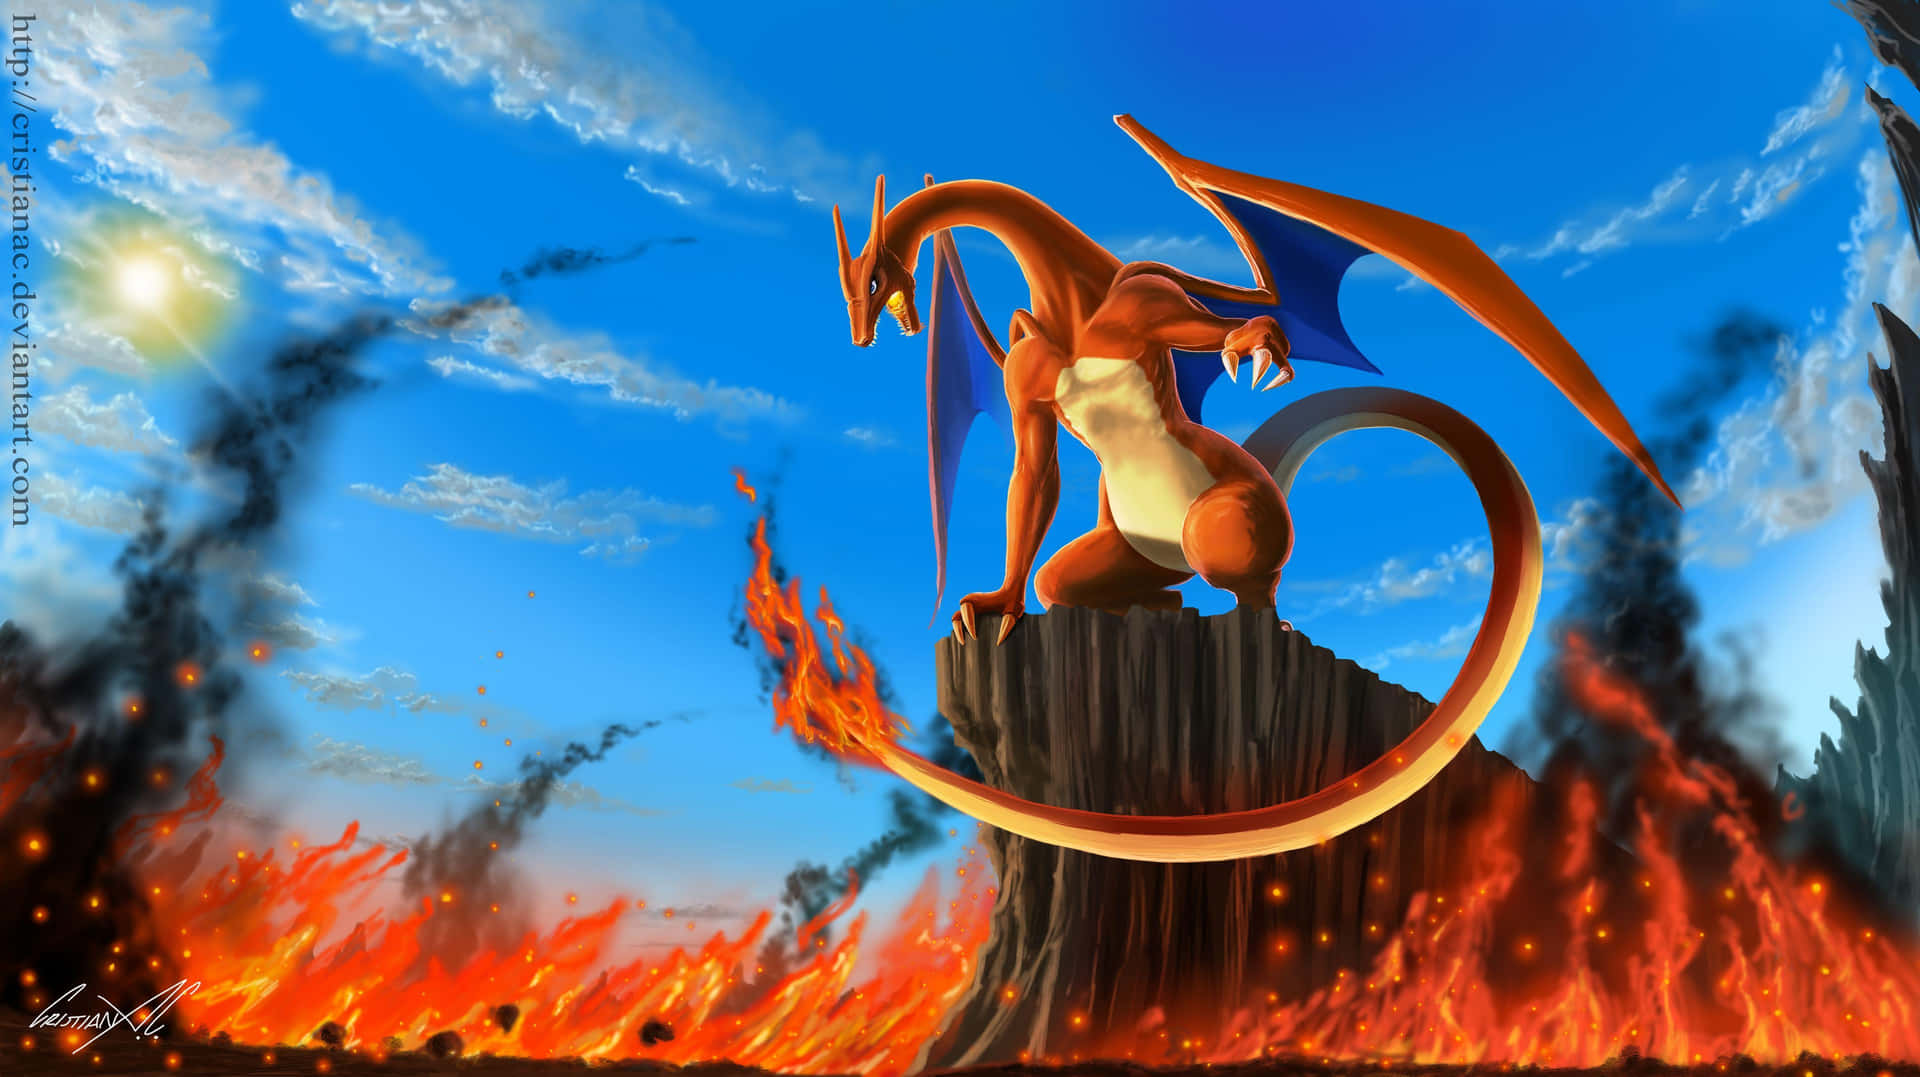 The Phenomenal Firepower of Charizard - The Ultimate Pokemon